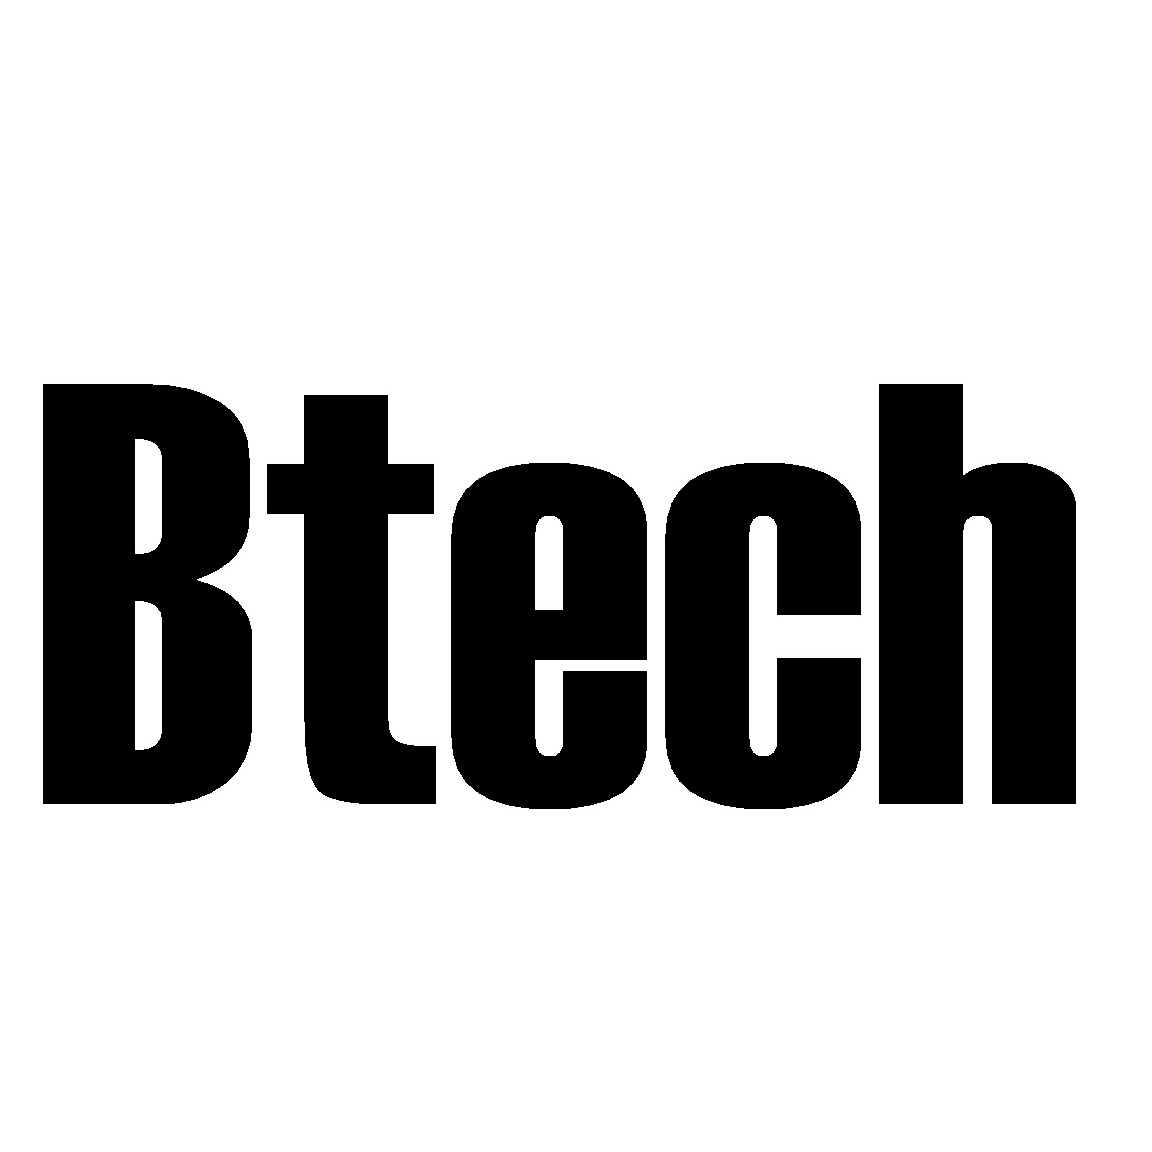 Btech Online Logo